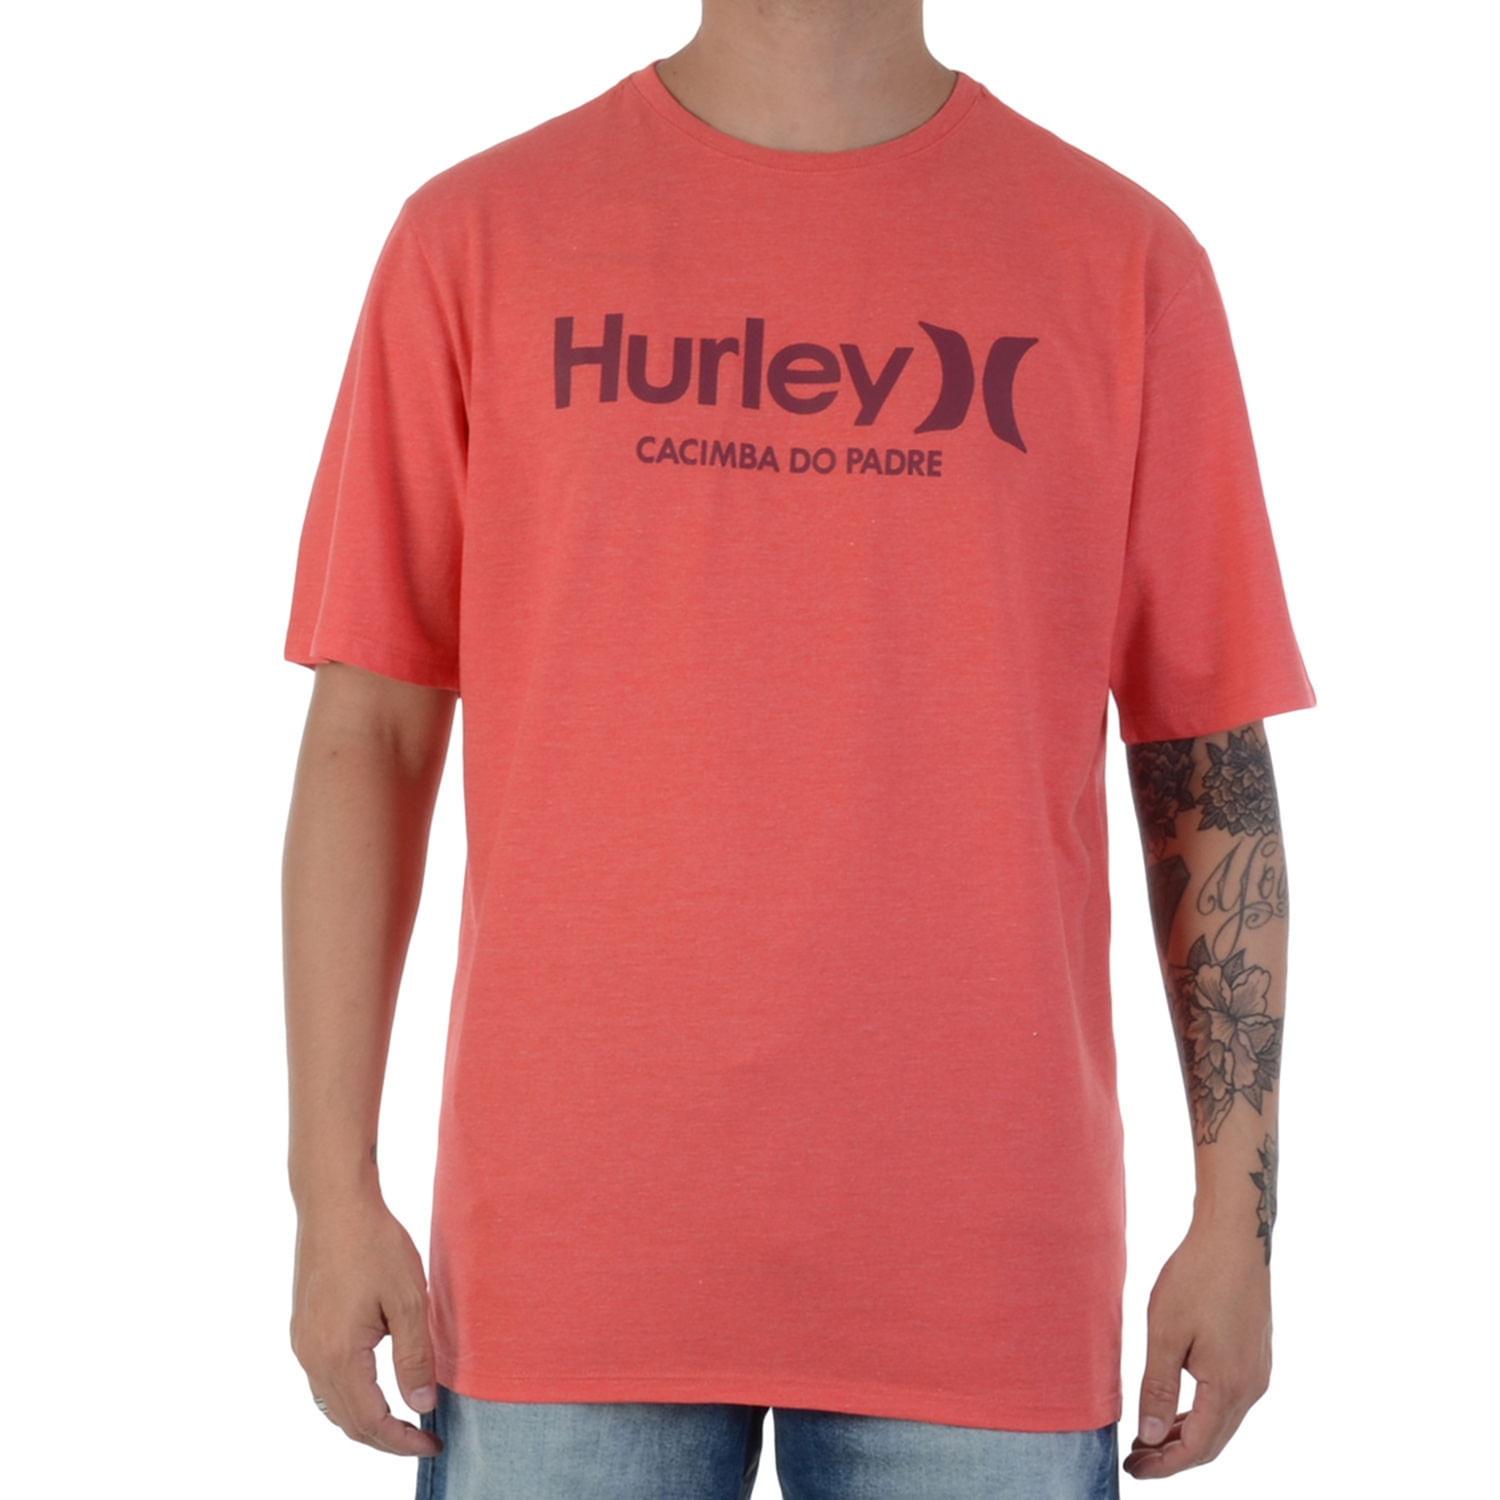 Camiseta Hurley Cacimba do Padre